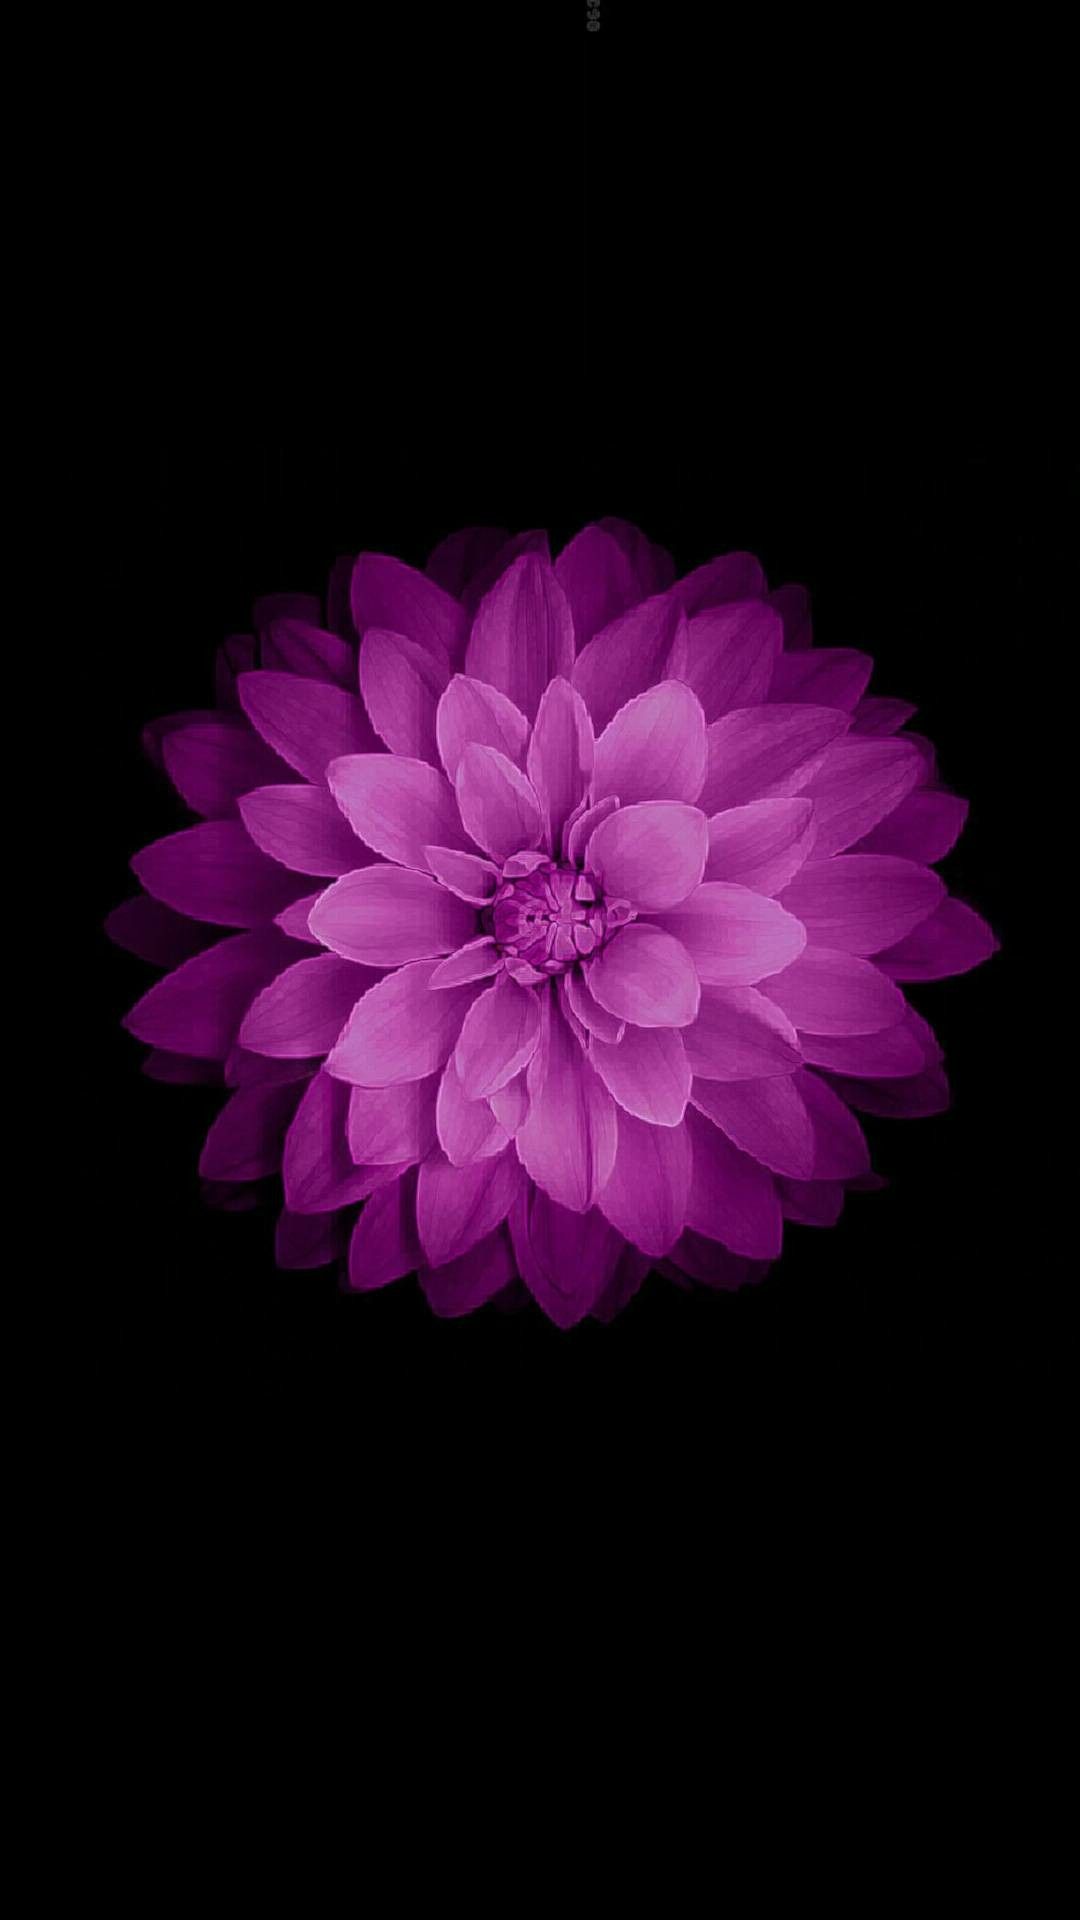 Pink flower. Flower iphone wallpaper, iPhone 5s wallpaper, iPhone